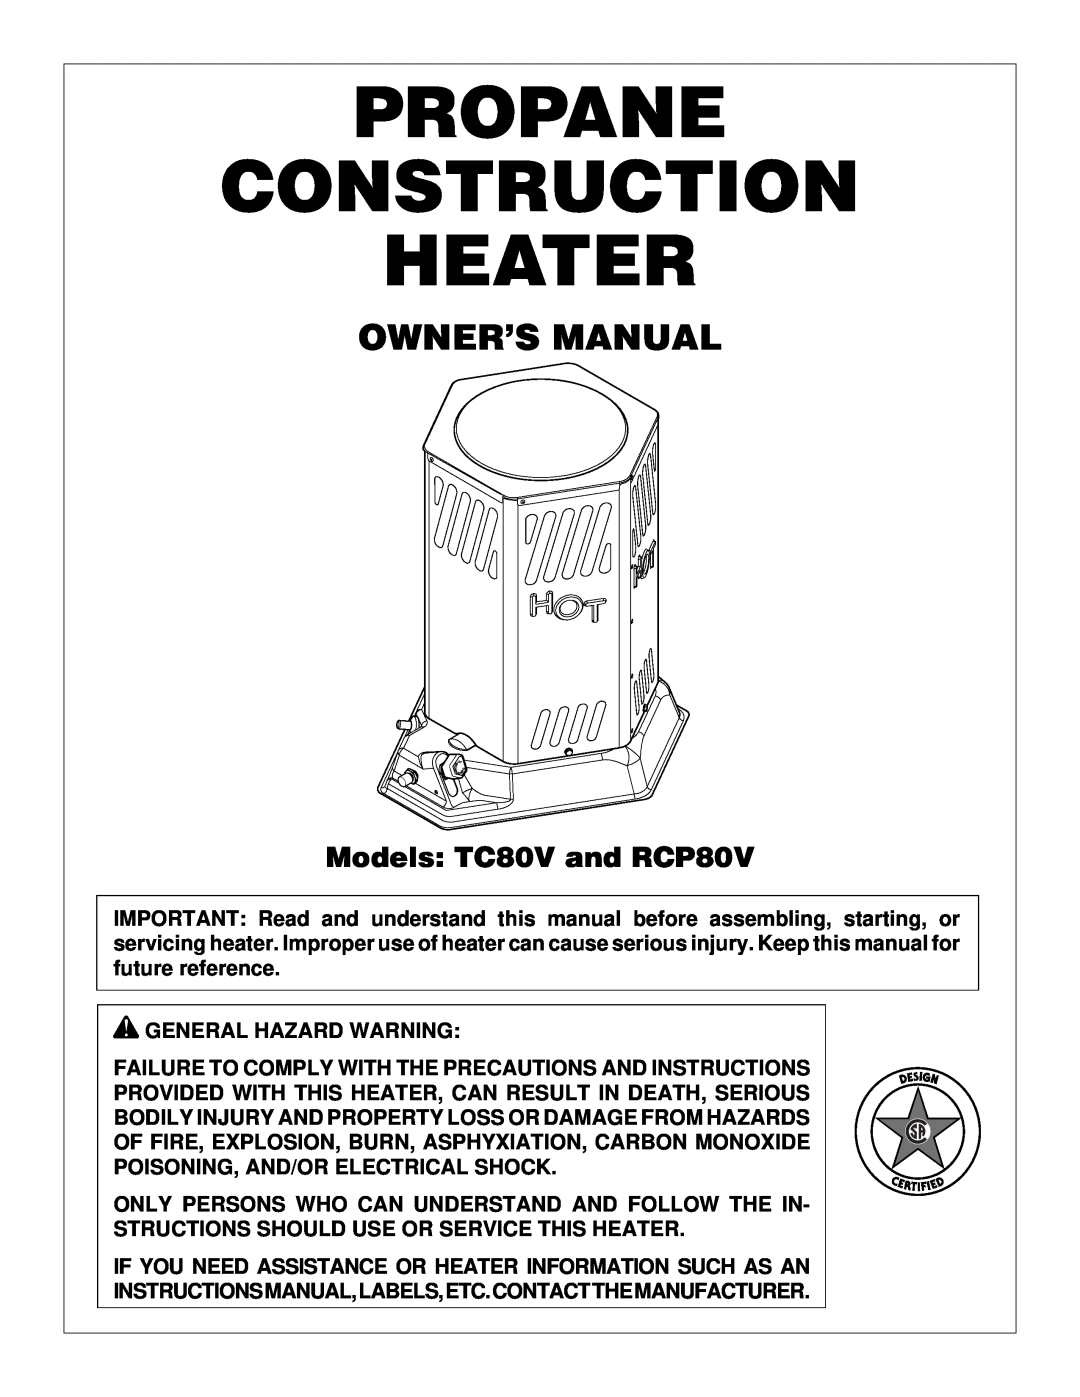 Desa owner manual Models TC80V and RCP80V, Propane Construction Heater 